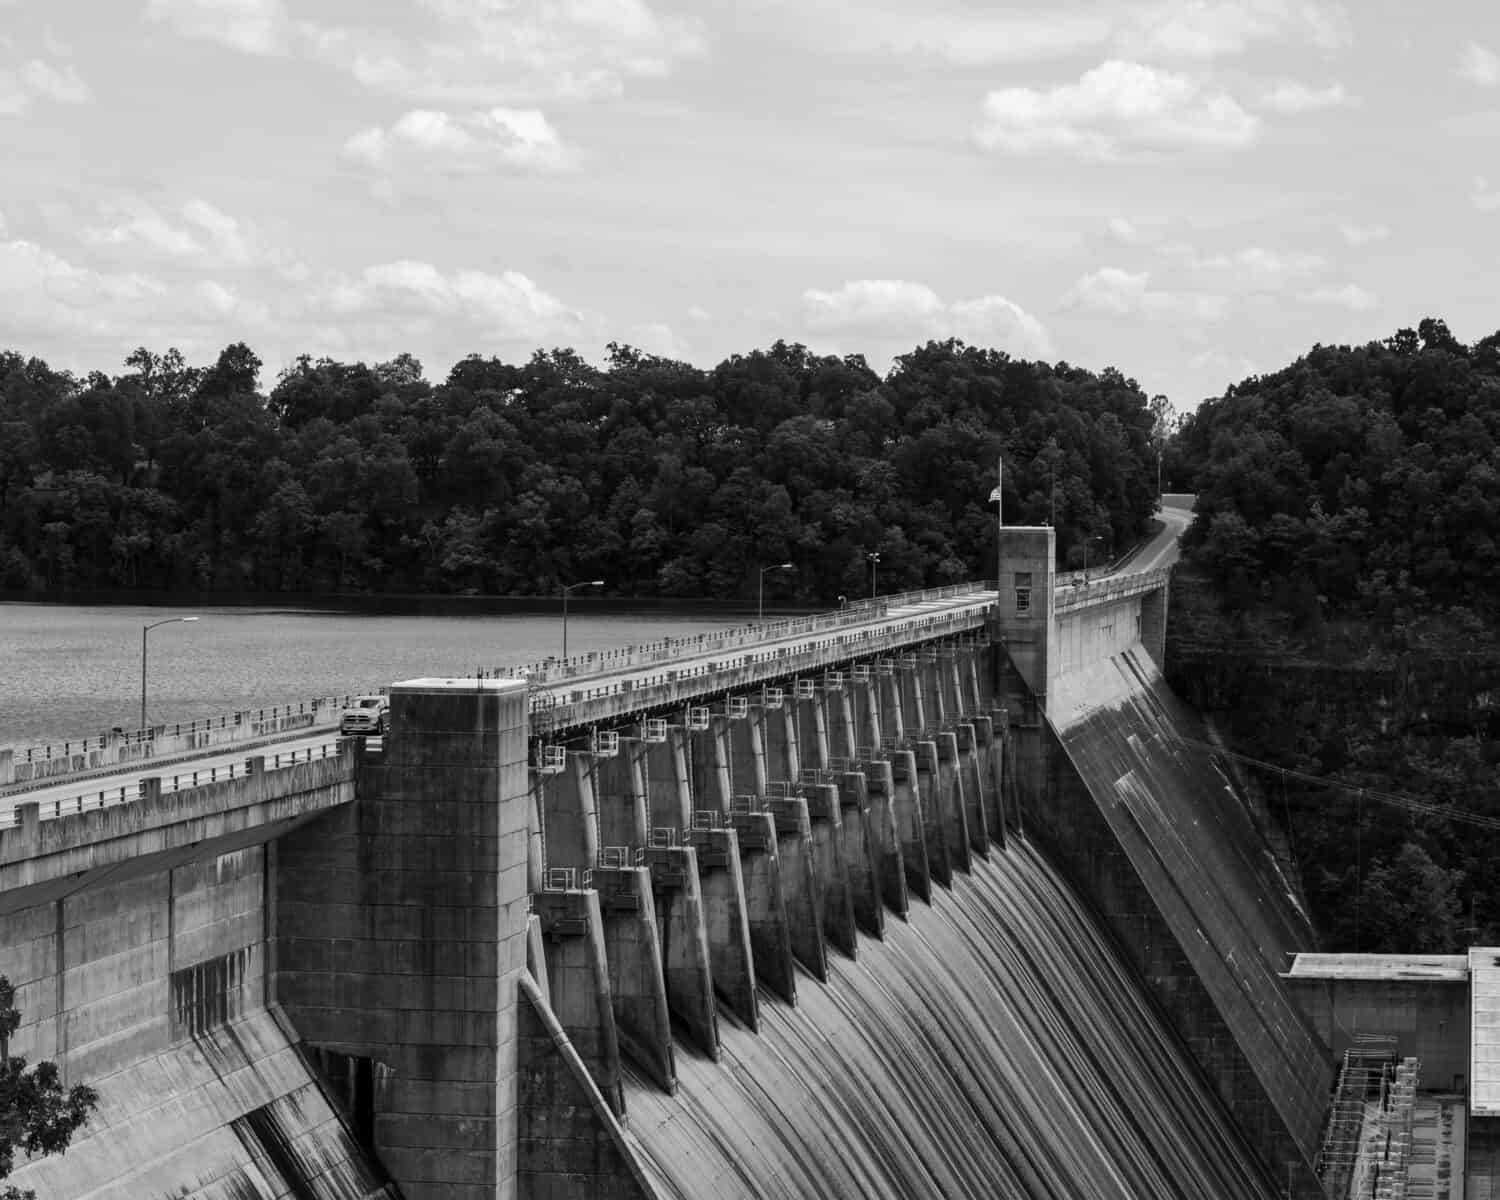 A Monochrome Photo Of The Bull Shoals Dam In Arkansas